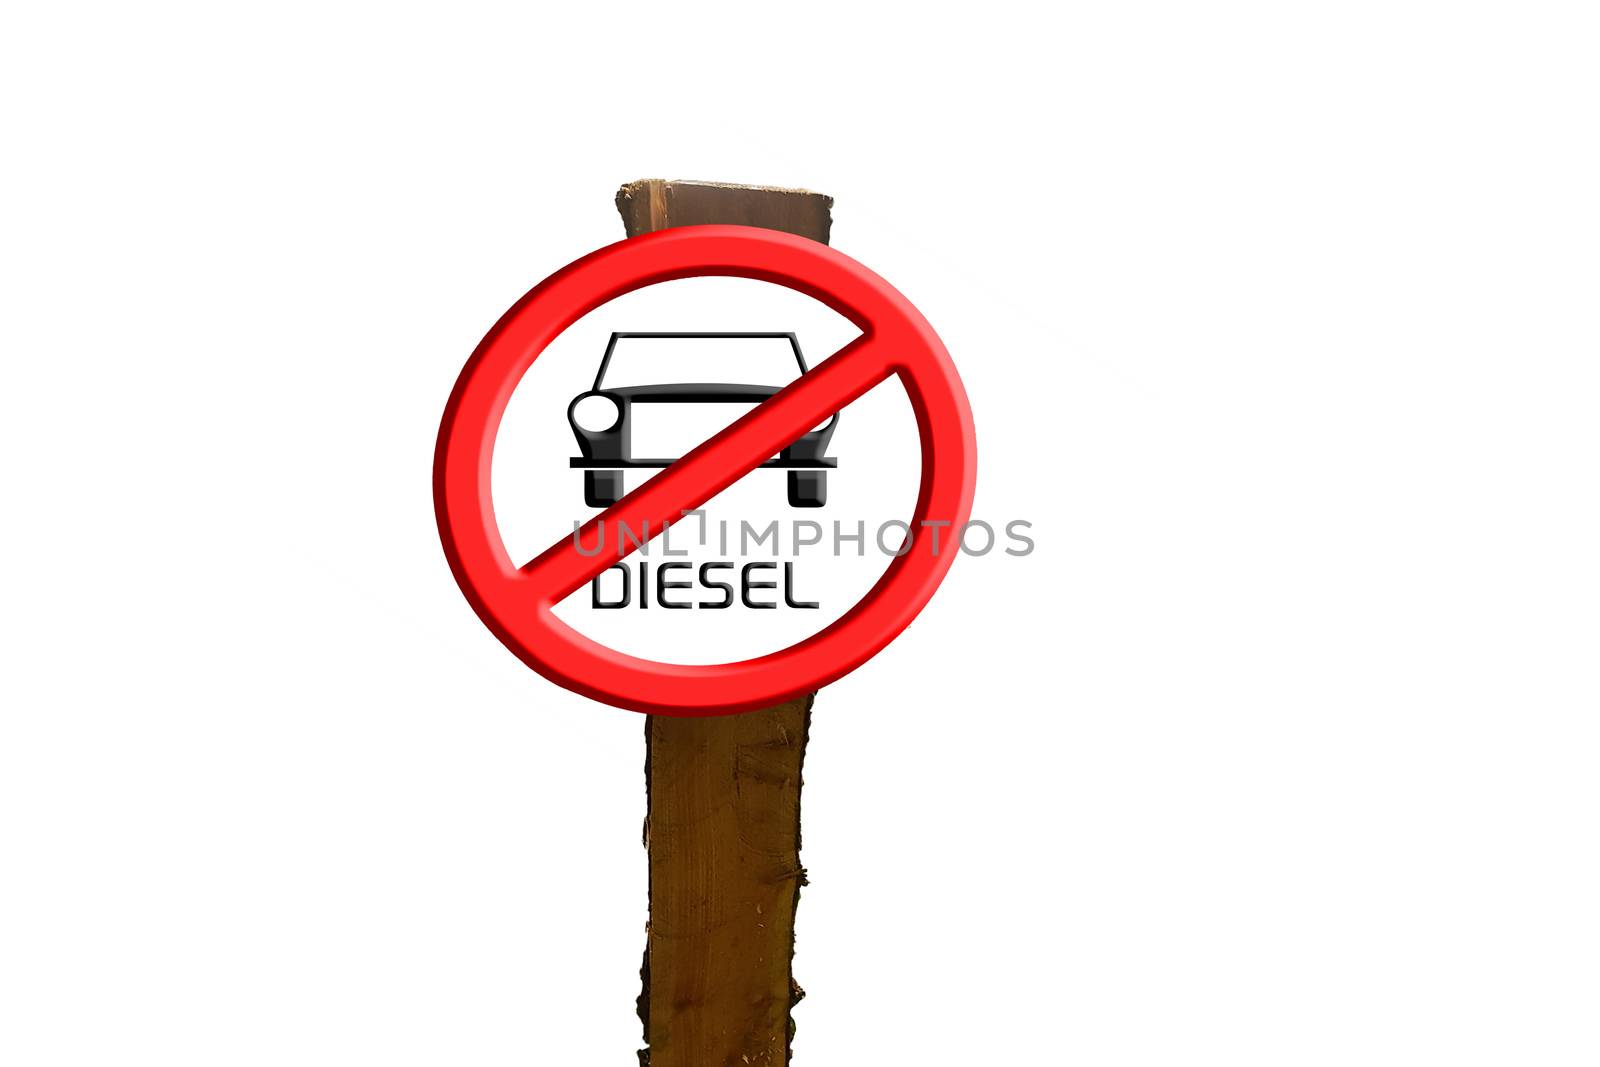 German traffic sign German traffic sign speak. Concept Diesel free zone, environmental zone, diesel prohibited, diesel prohibition or driving ban